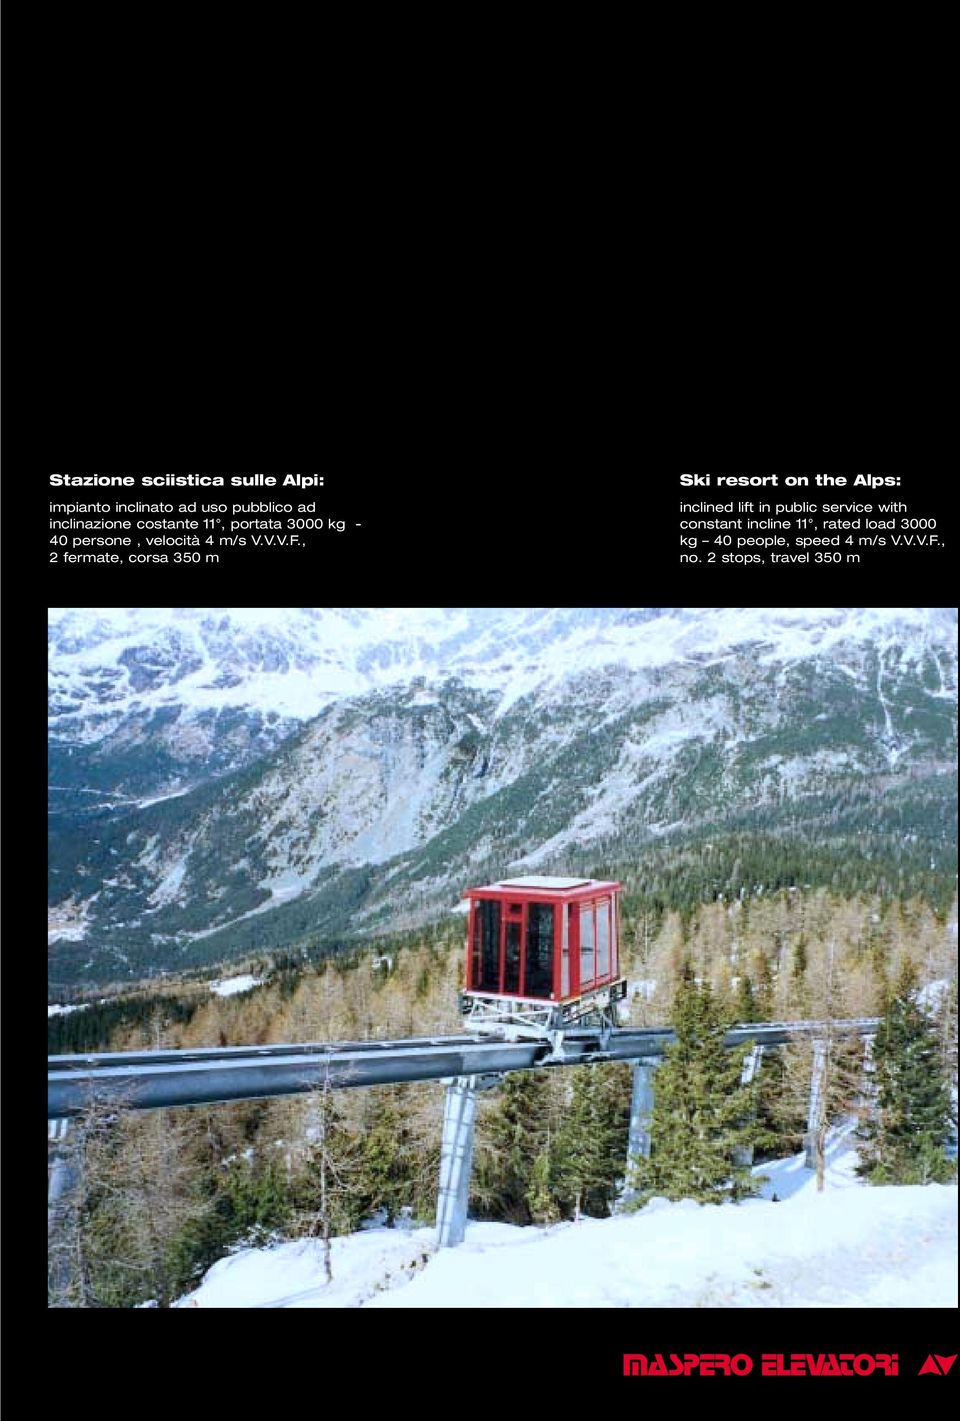 , 2 fermate, corsa 350 m Ski resort on the Alps: inclined lift in public service